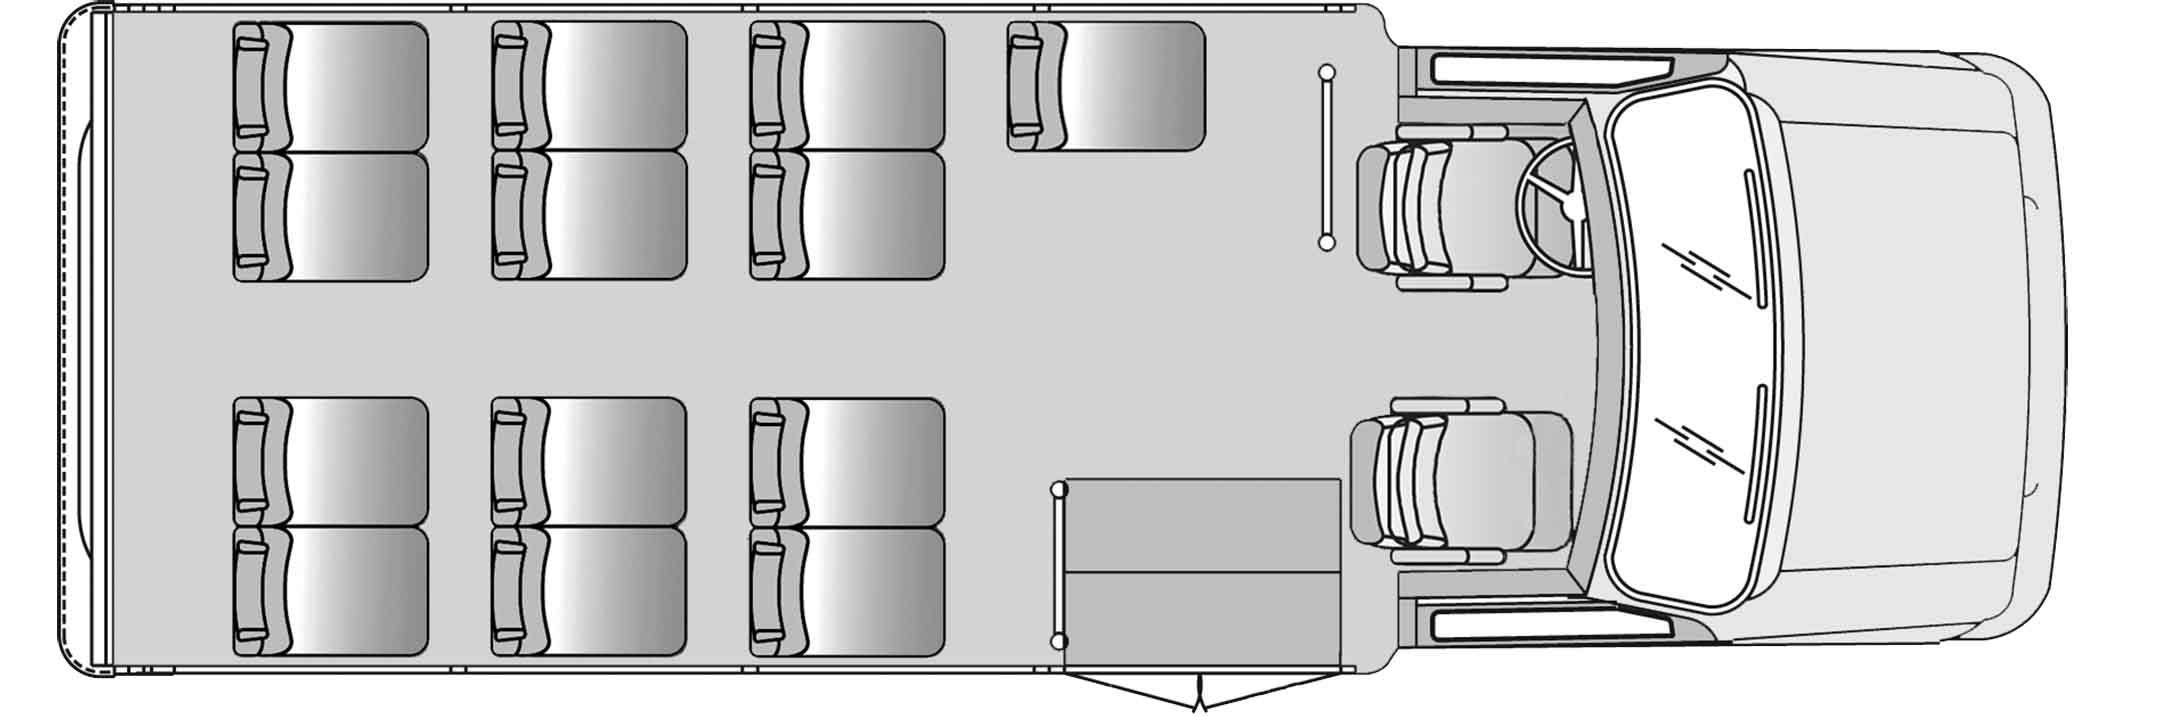 13 Passenger With Rear Cargo Area Plus Driver And Copilot Floorplan Image